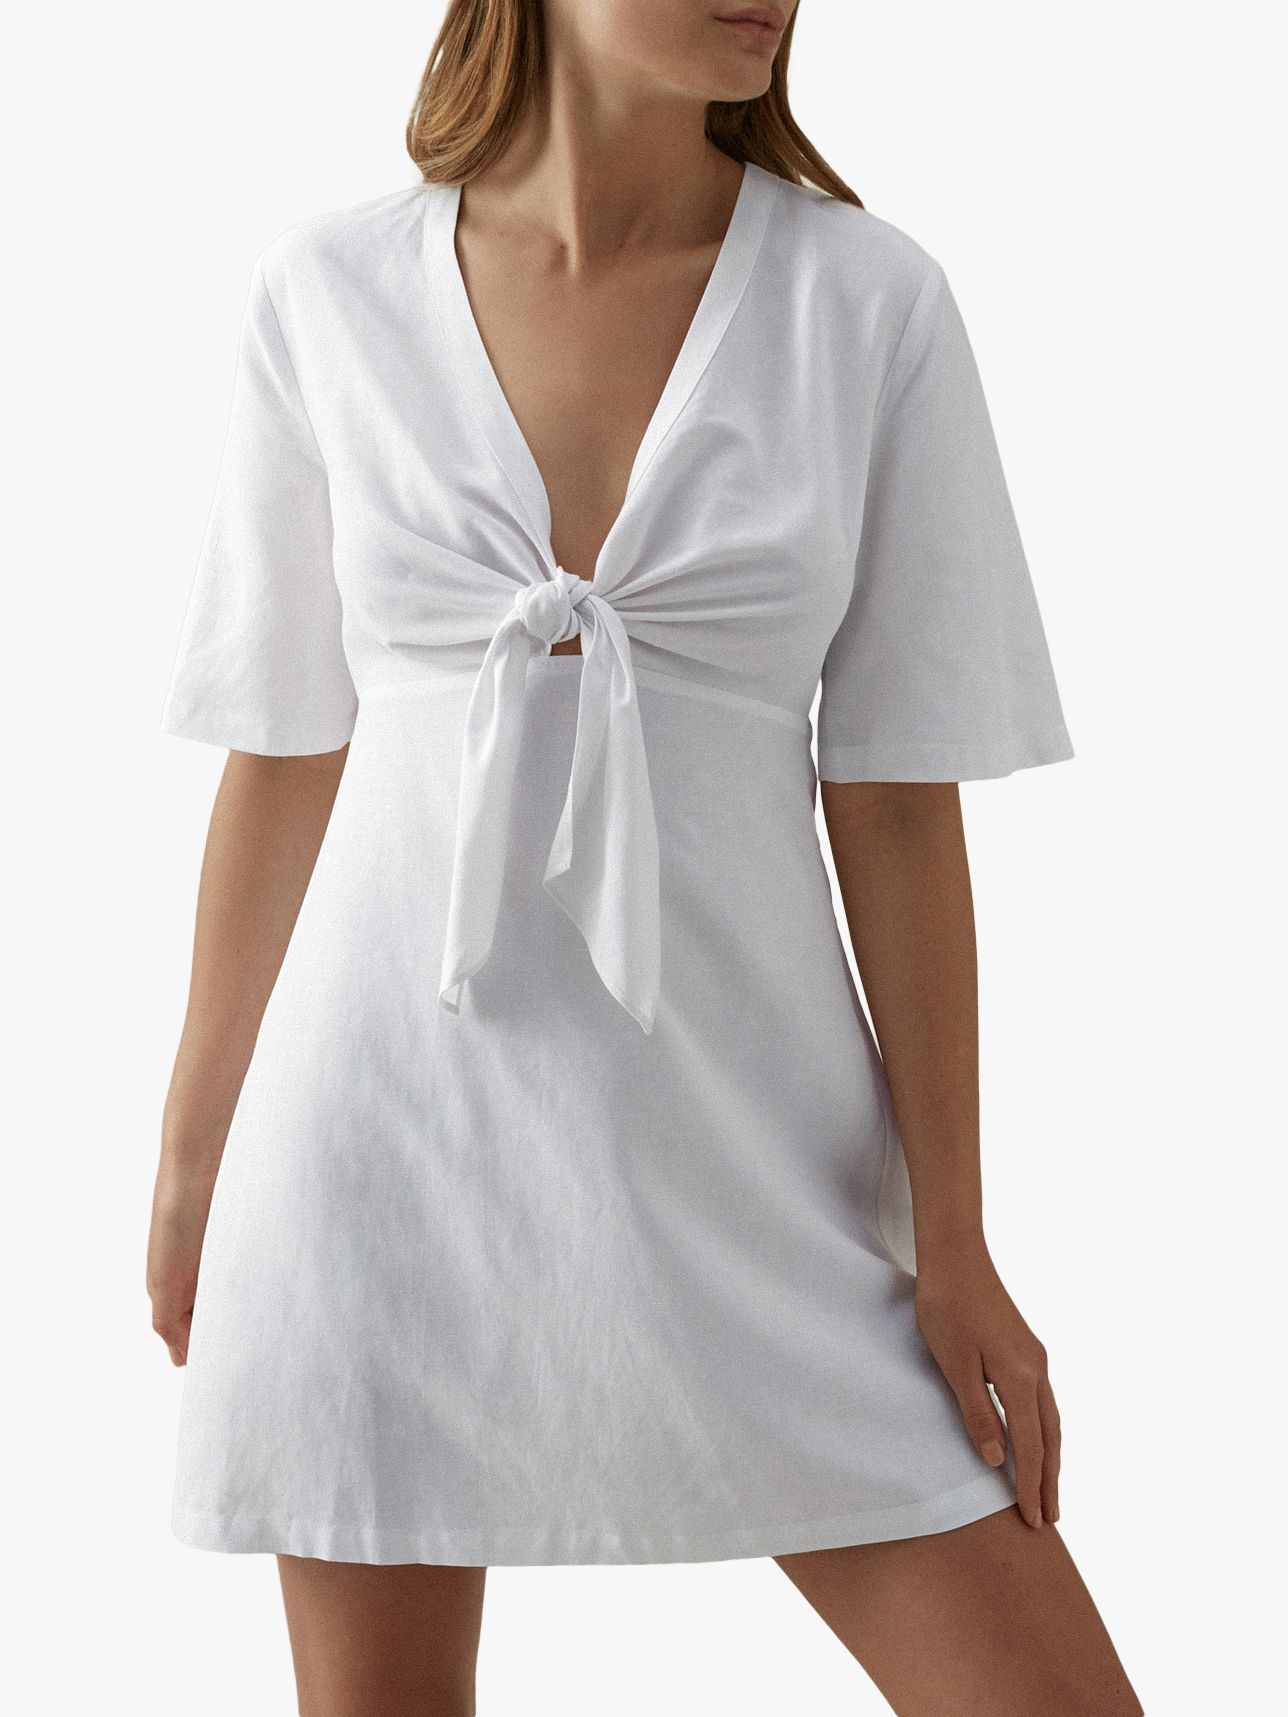 Karen Millen Tie Front Dress, White